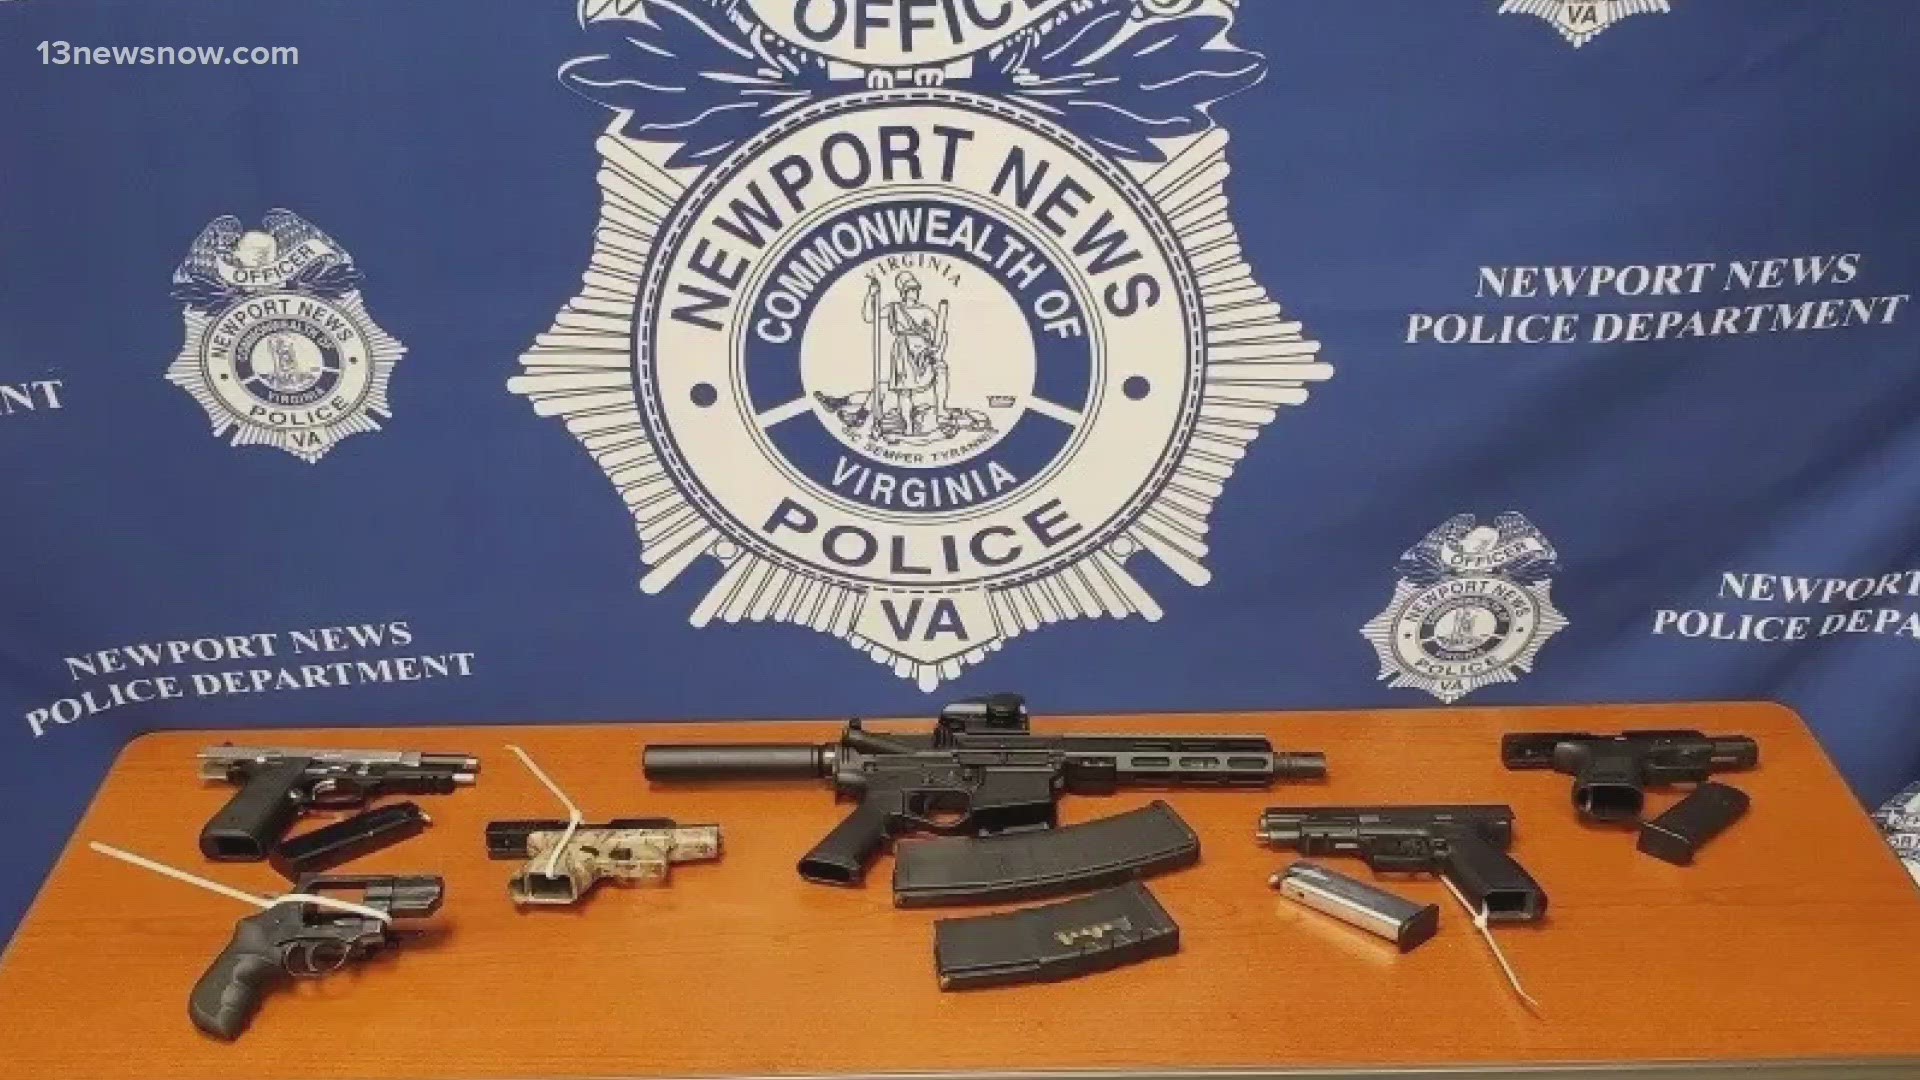 Police also found several guns.